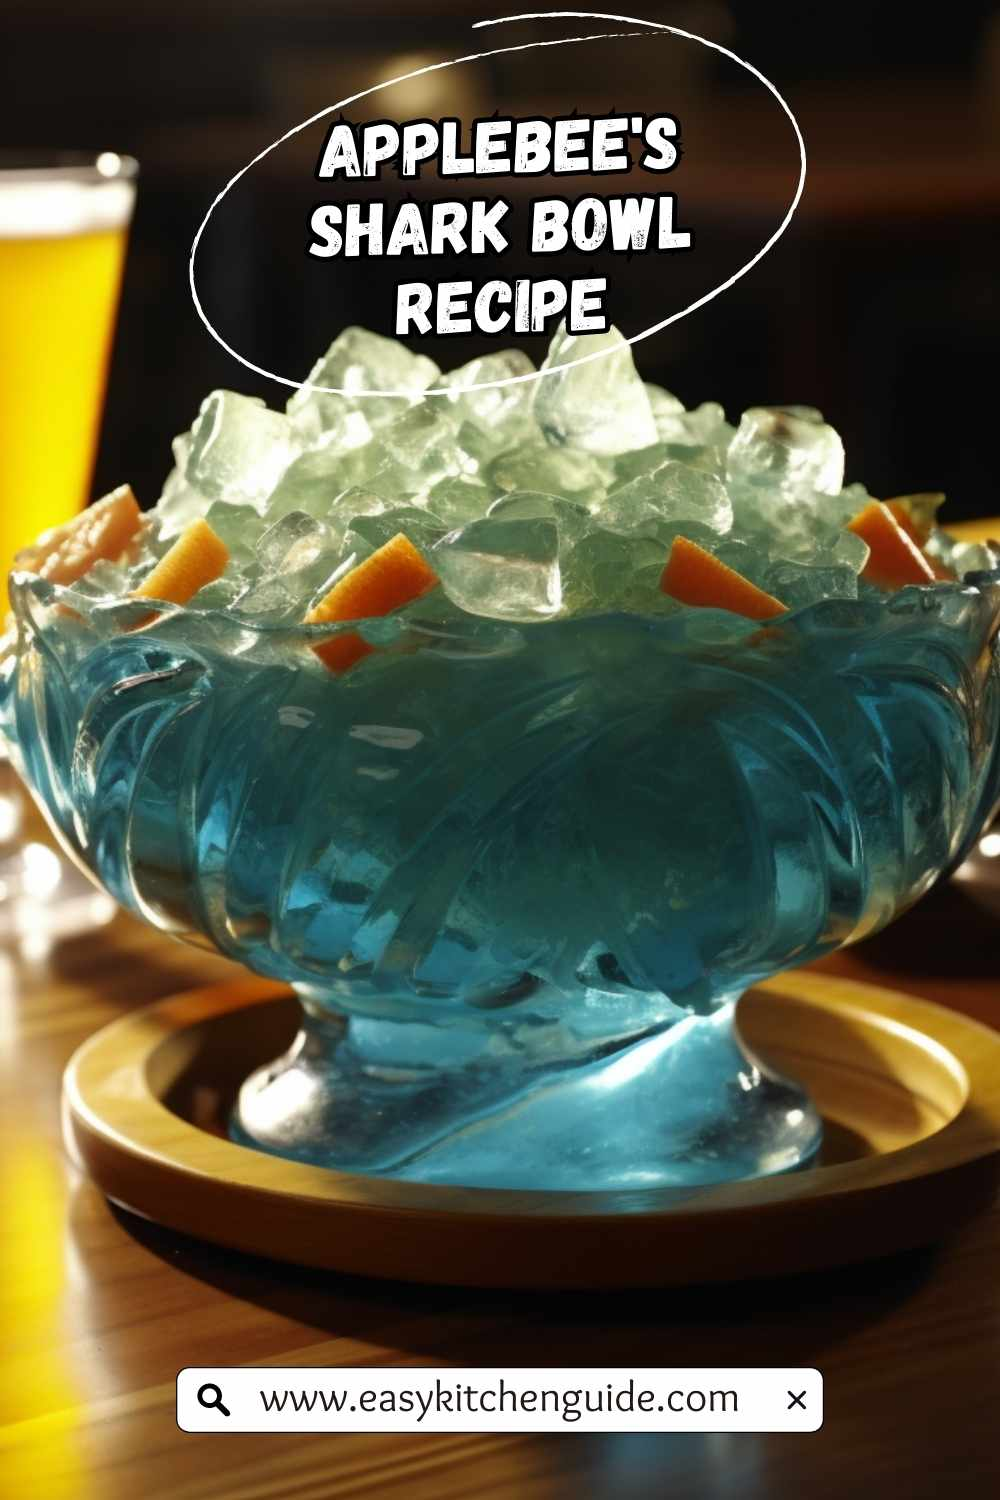 Applebee's Shark Bowl Recipe